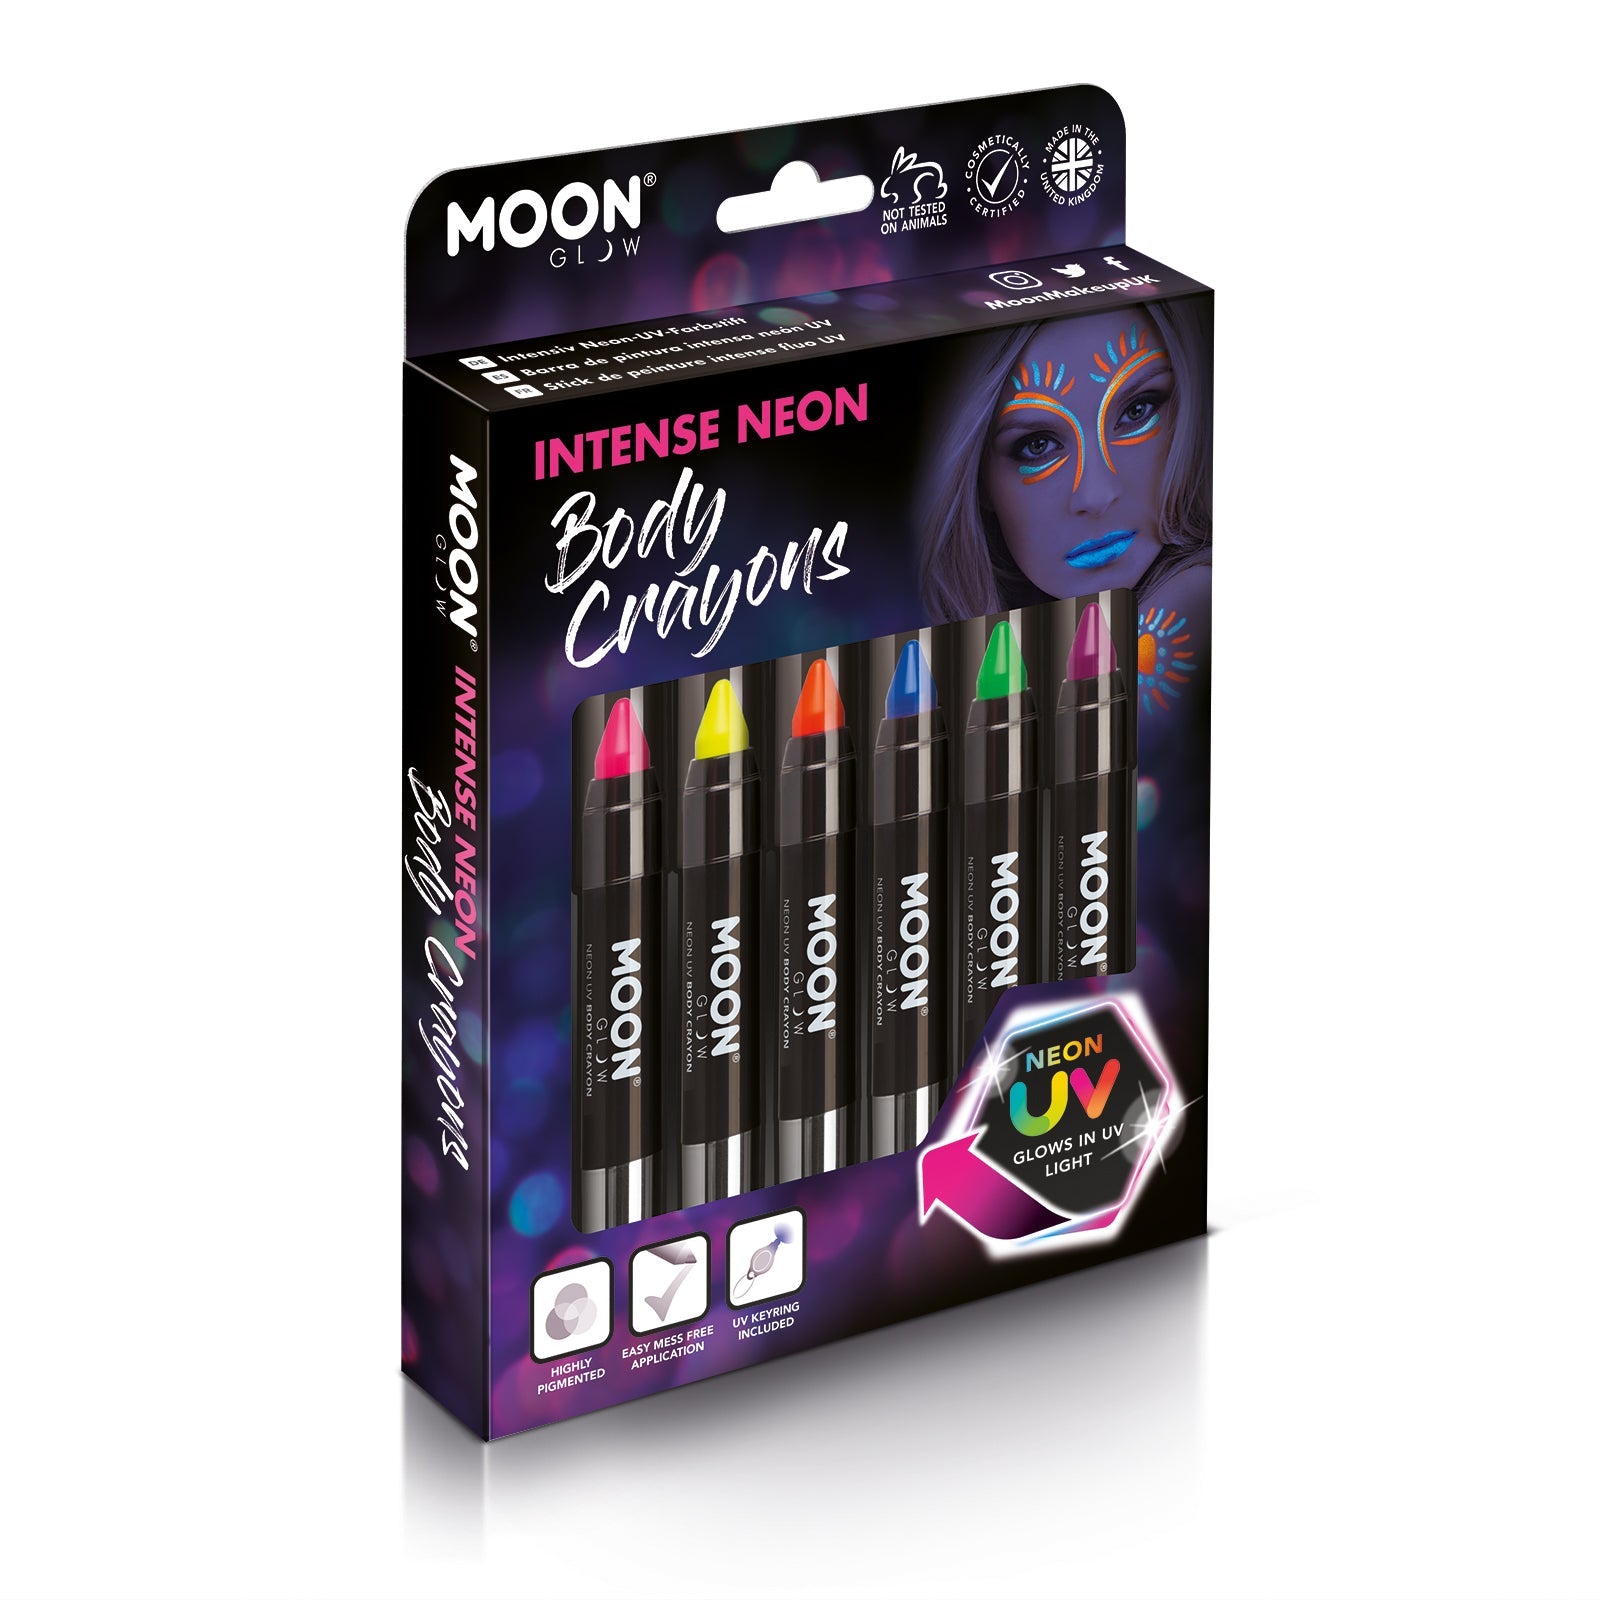 Intense Neon UV Glow Blacklight Face & Body Crayons Boxset - 6 crayons, UV light. Cosmetically certified, FDA & Health Canada compliant and cruelty free.